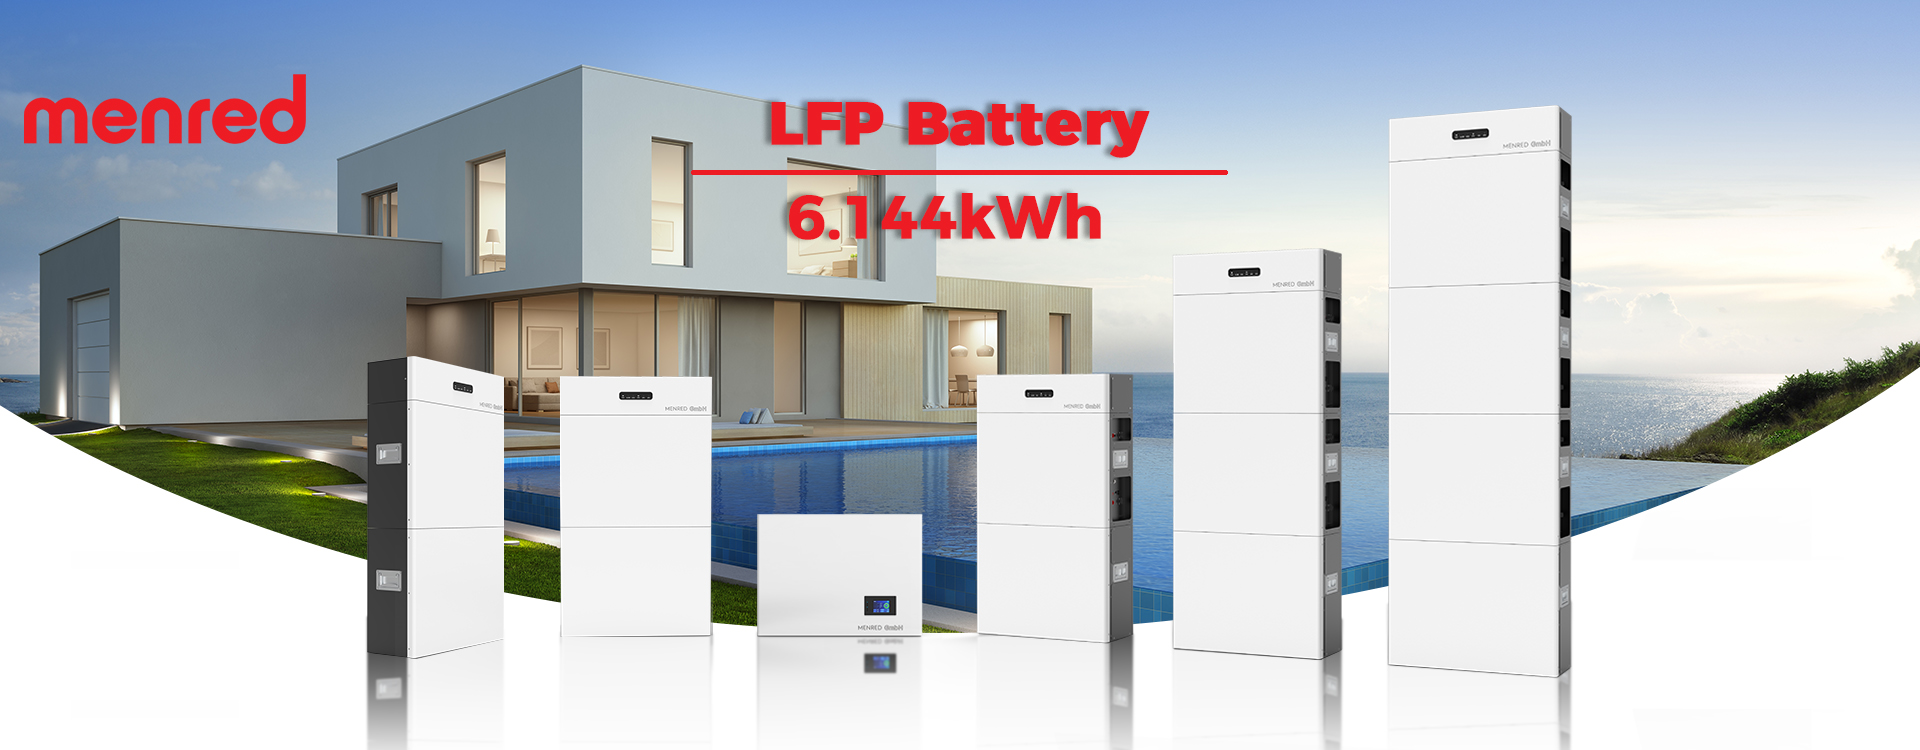 LifeP4 wall Power Storage Battery